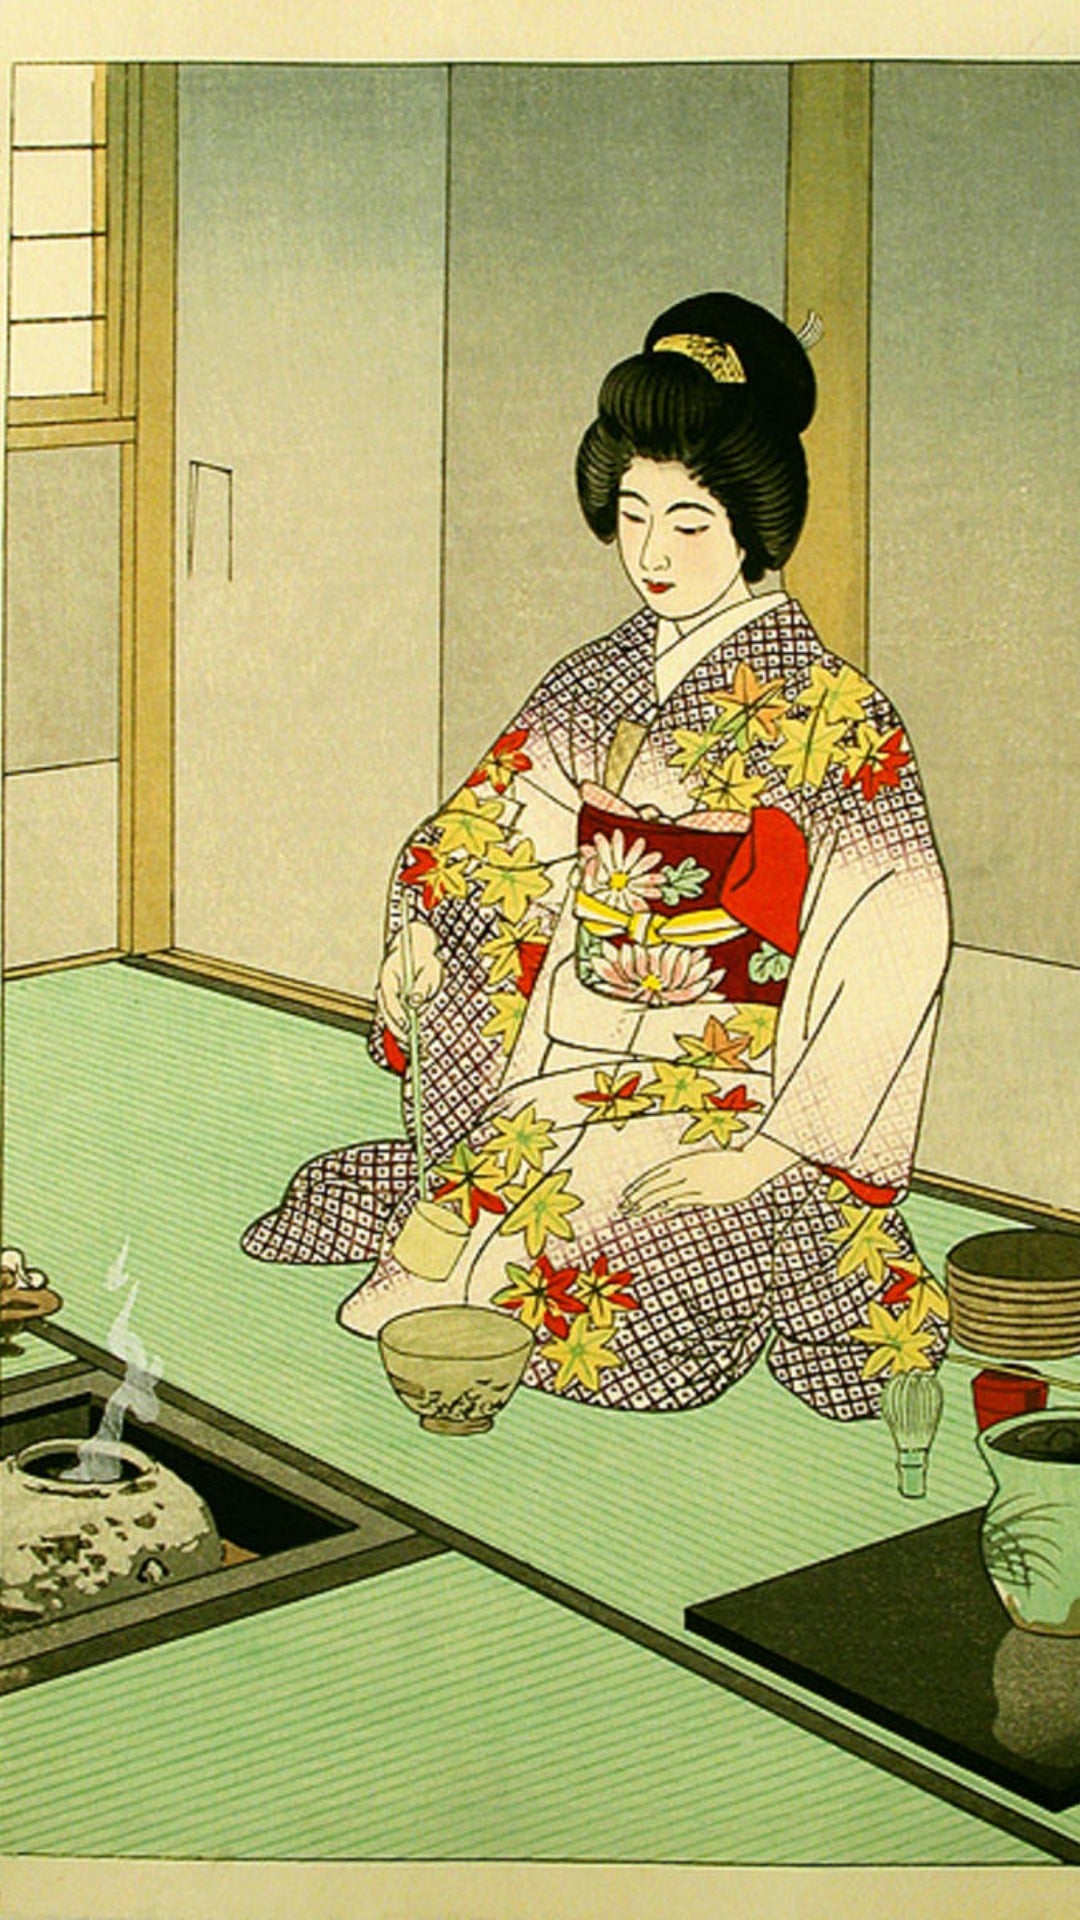 Matcha, green tea, tea ceremony, tea room, tatami mats, japanese woman, tea master, kimono, matcha history, ancient, old drawing, japanese art, japanese culture